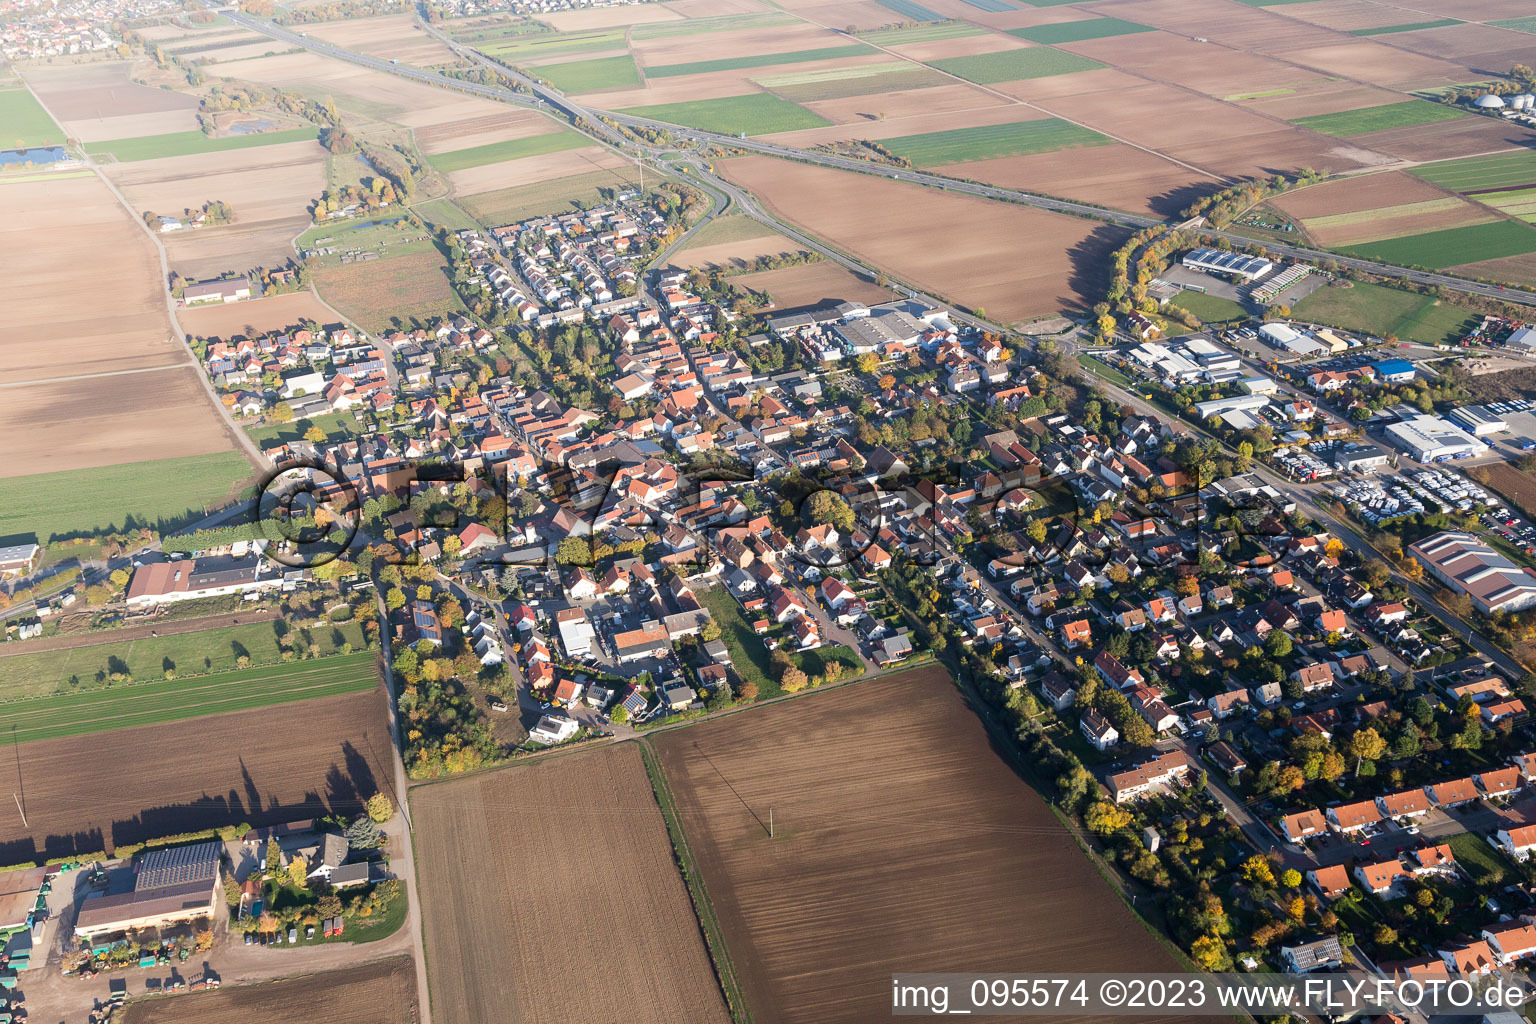 Hochdorf-Assenheim in the state Rhineland-Palatinate, Germany